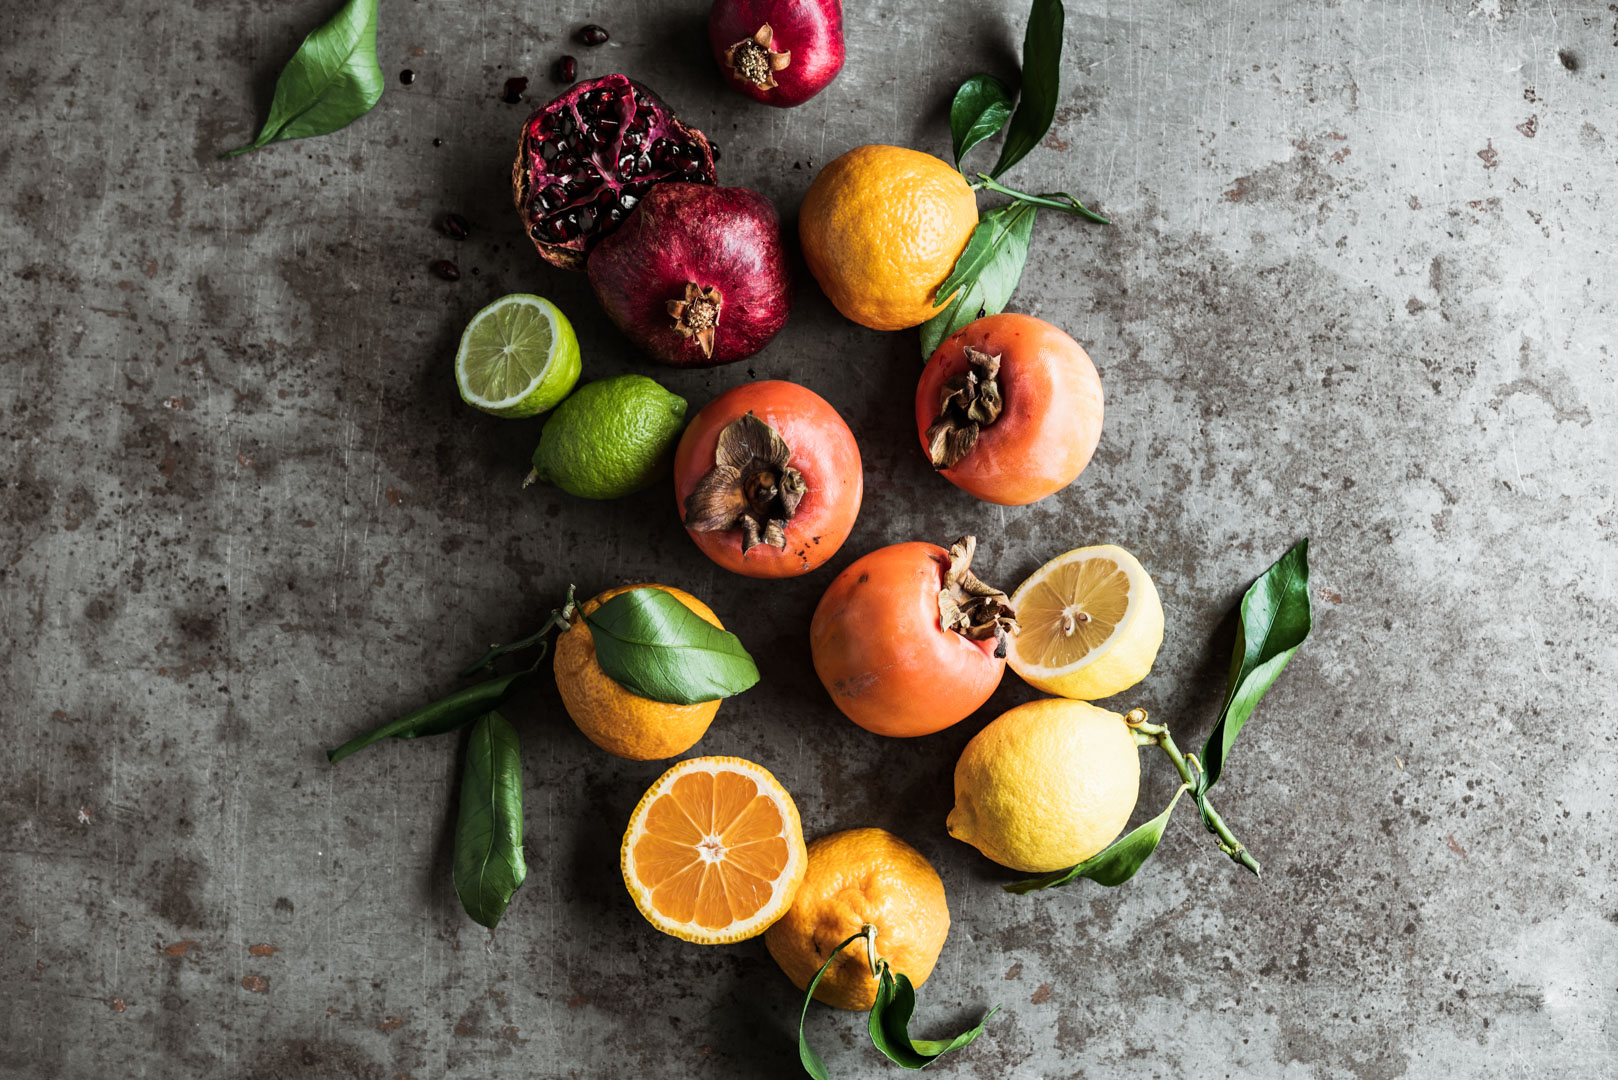 WINTER GREEK SALAD ingredients: 
persimmon, pomegranate & citrus